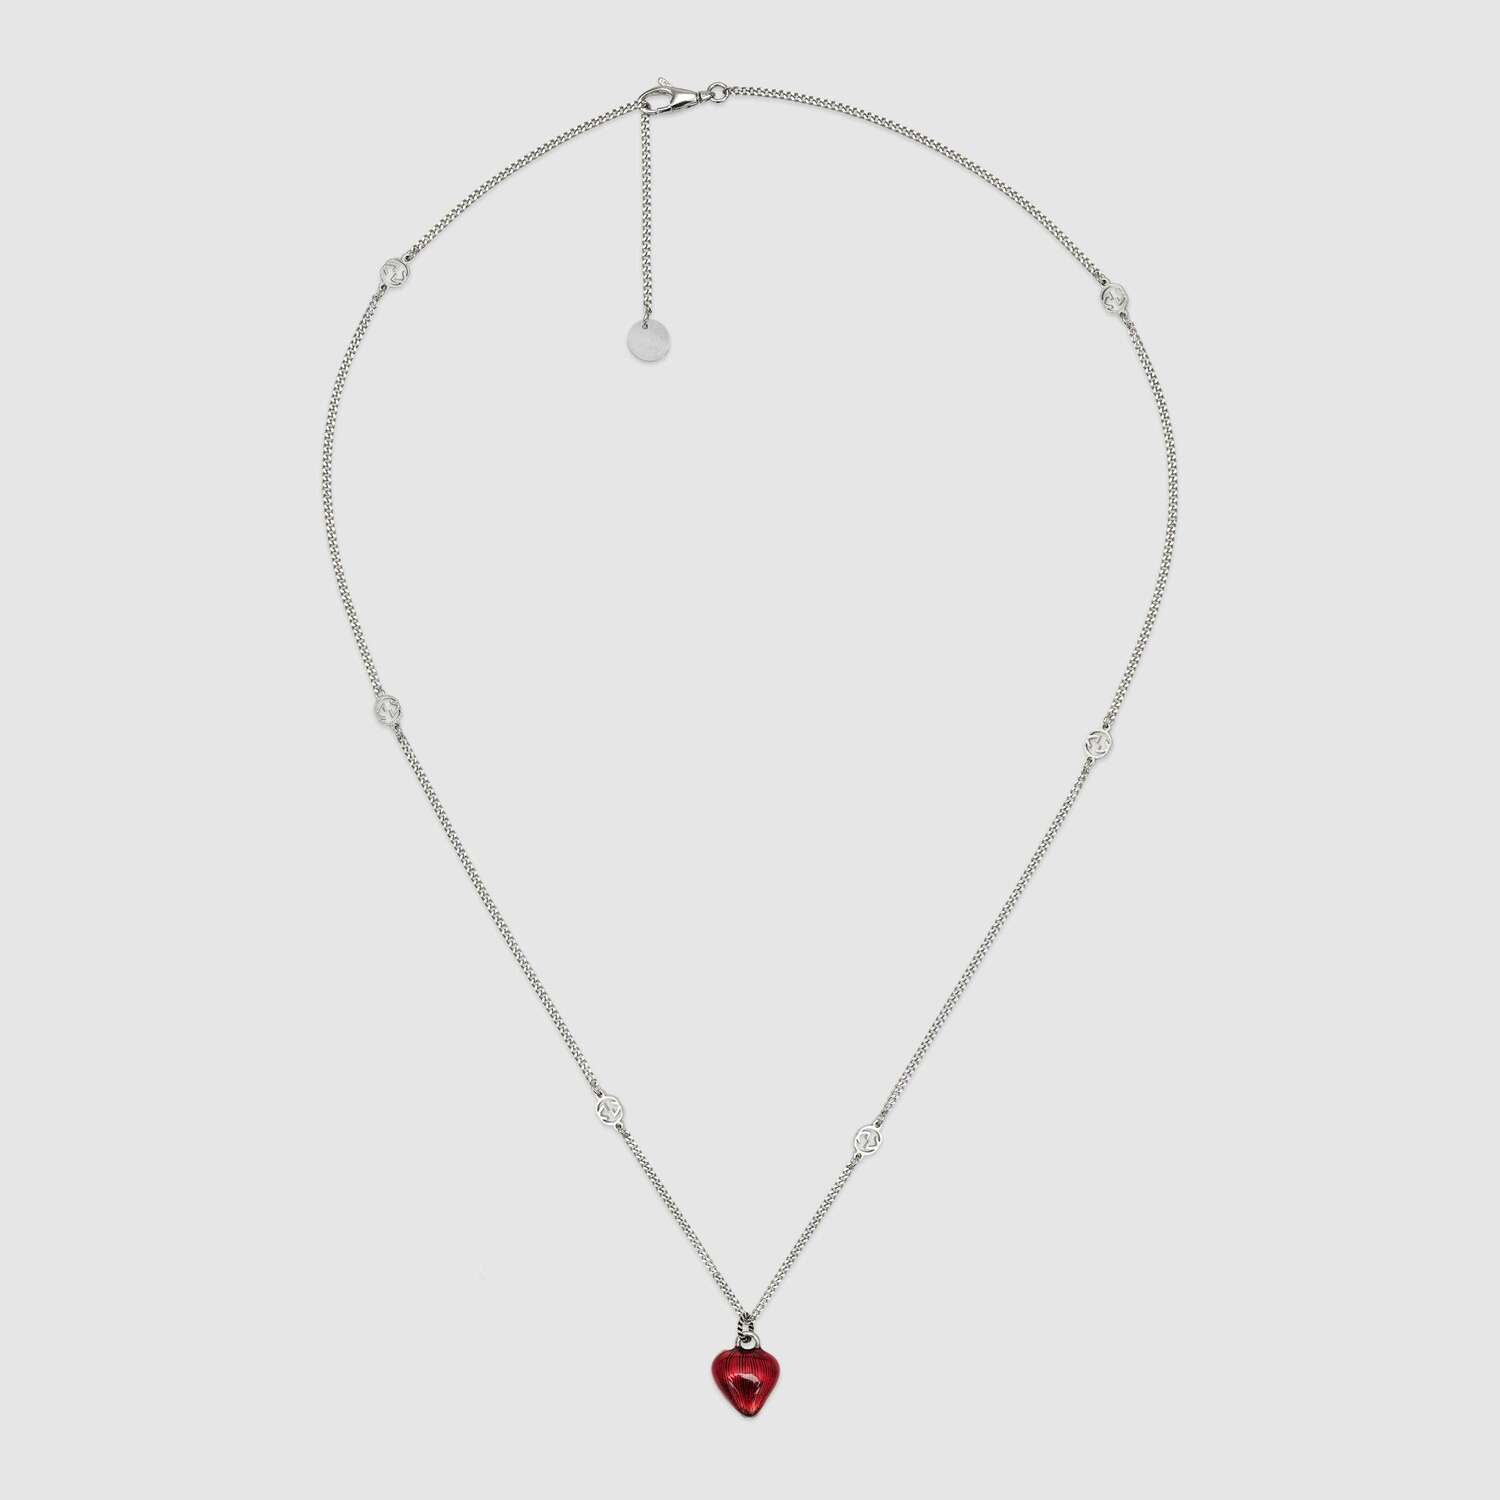 Gucci Interlocking G necklace with strawberry